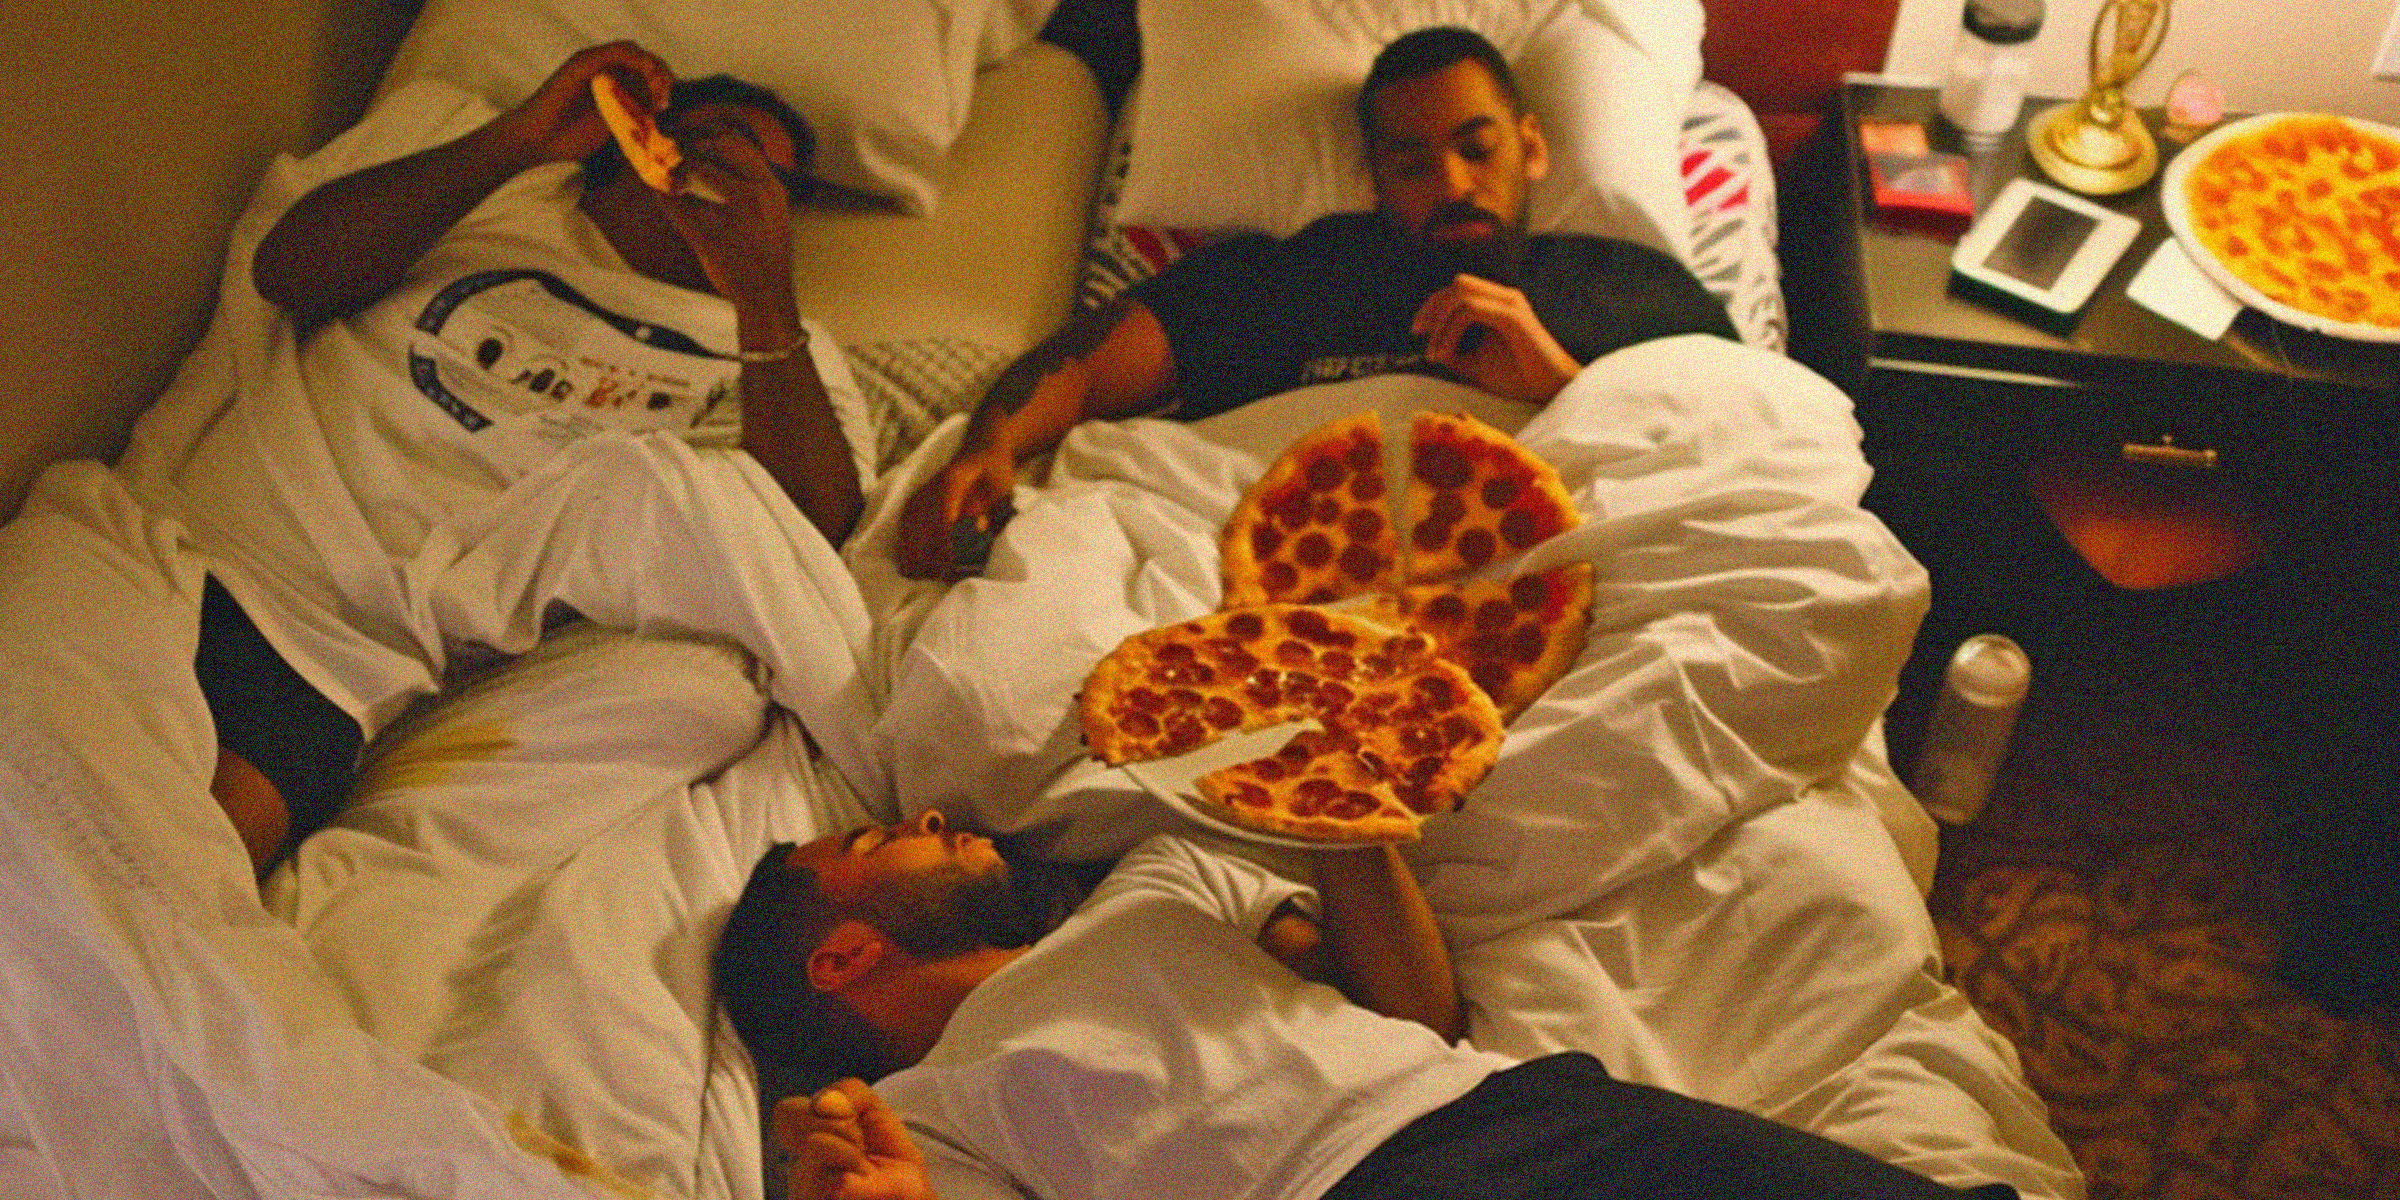 Men enjoying a pizza party | Source: AmoMama